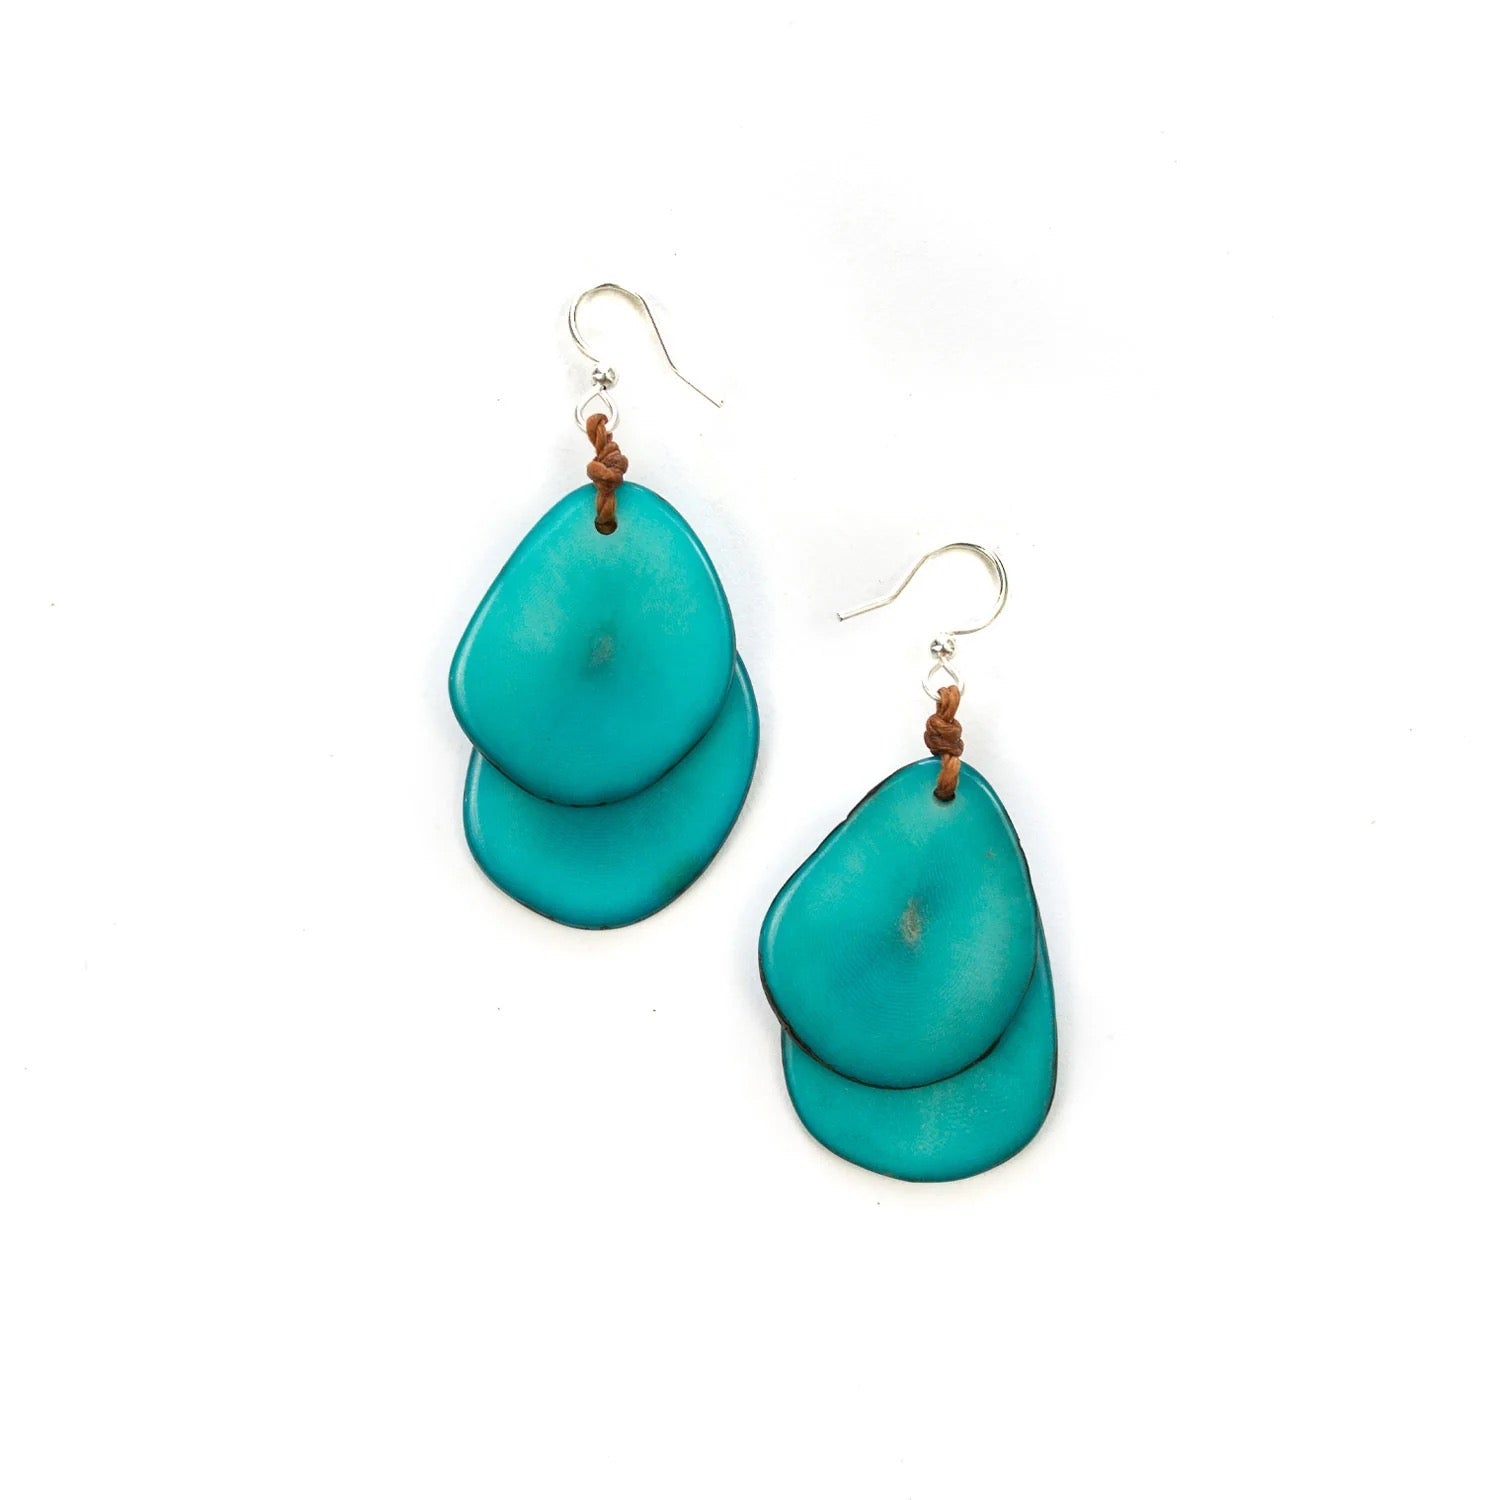 Tagua Jewelry "Fiesta" Dangle Earrings in Turquoise